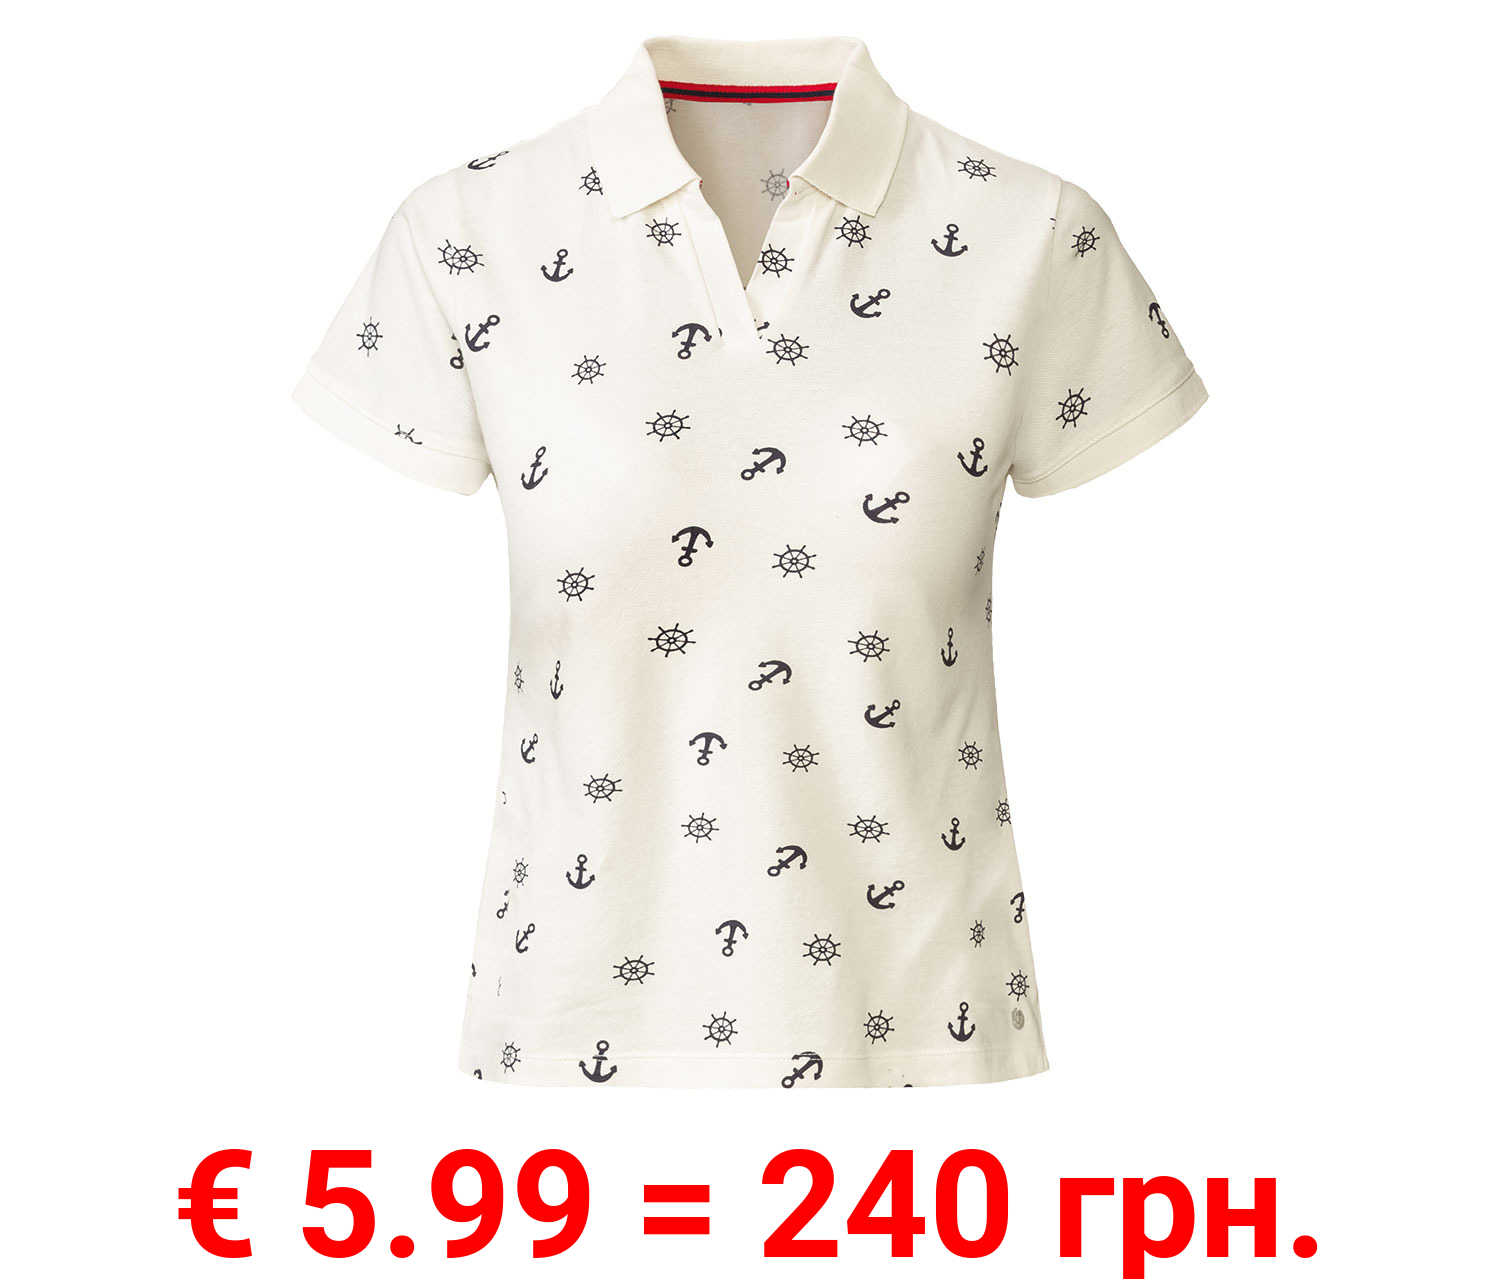 esmara® Damen Poloshirt in hochwertiger Pikee-Qualität